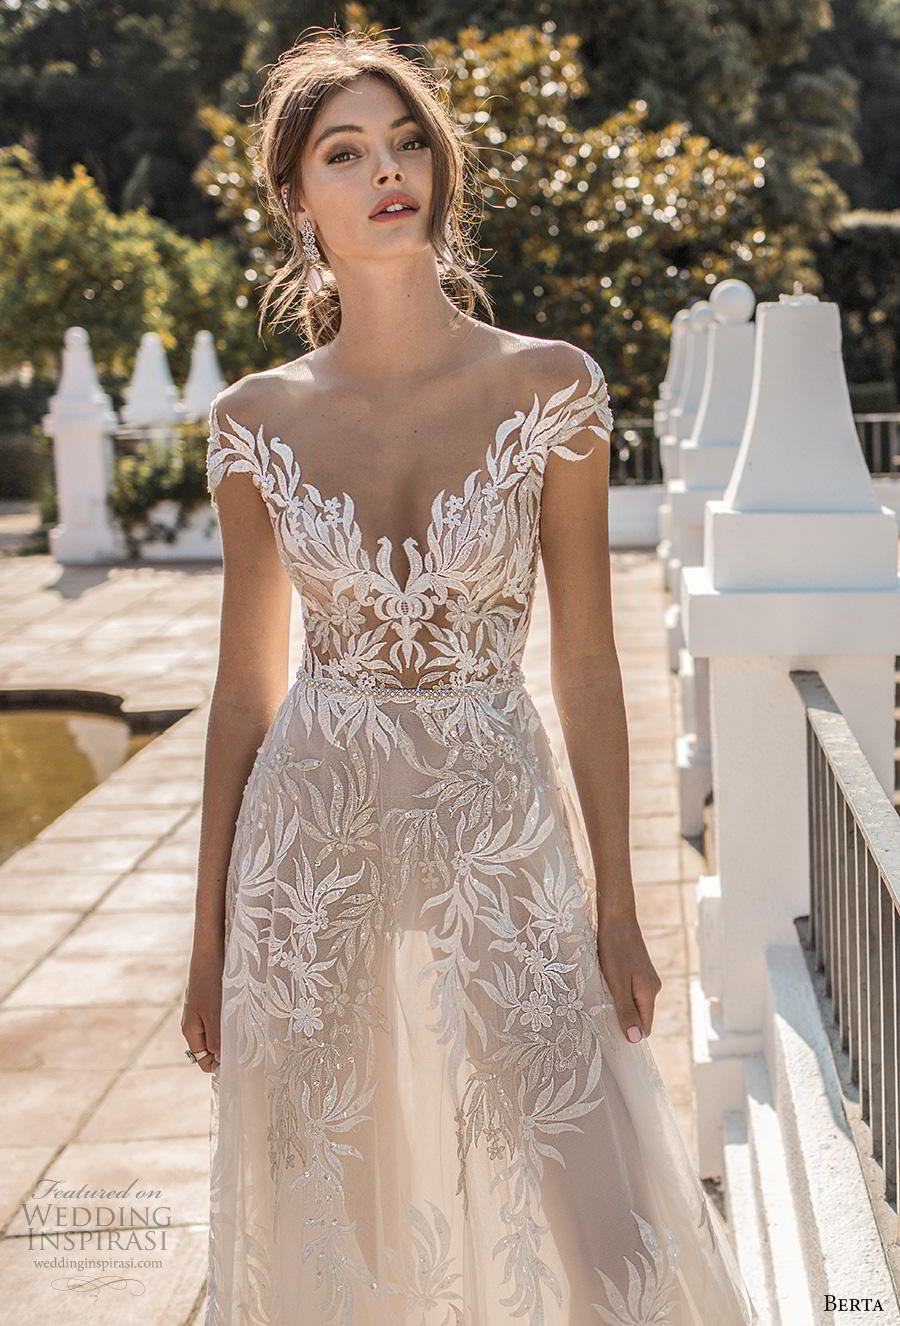 Gali Karten 2018 Wedding Dresses — First Look at the 